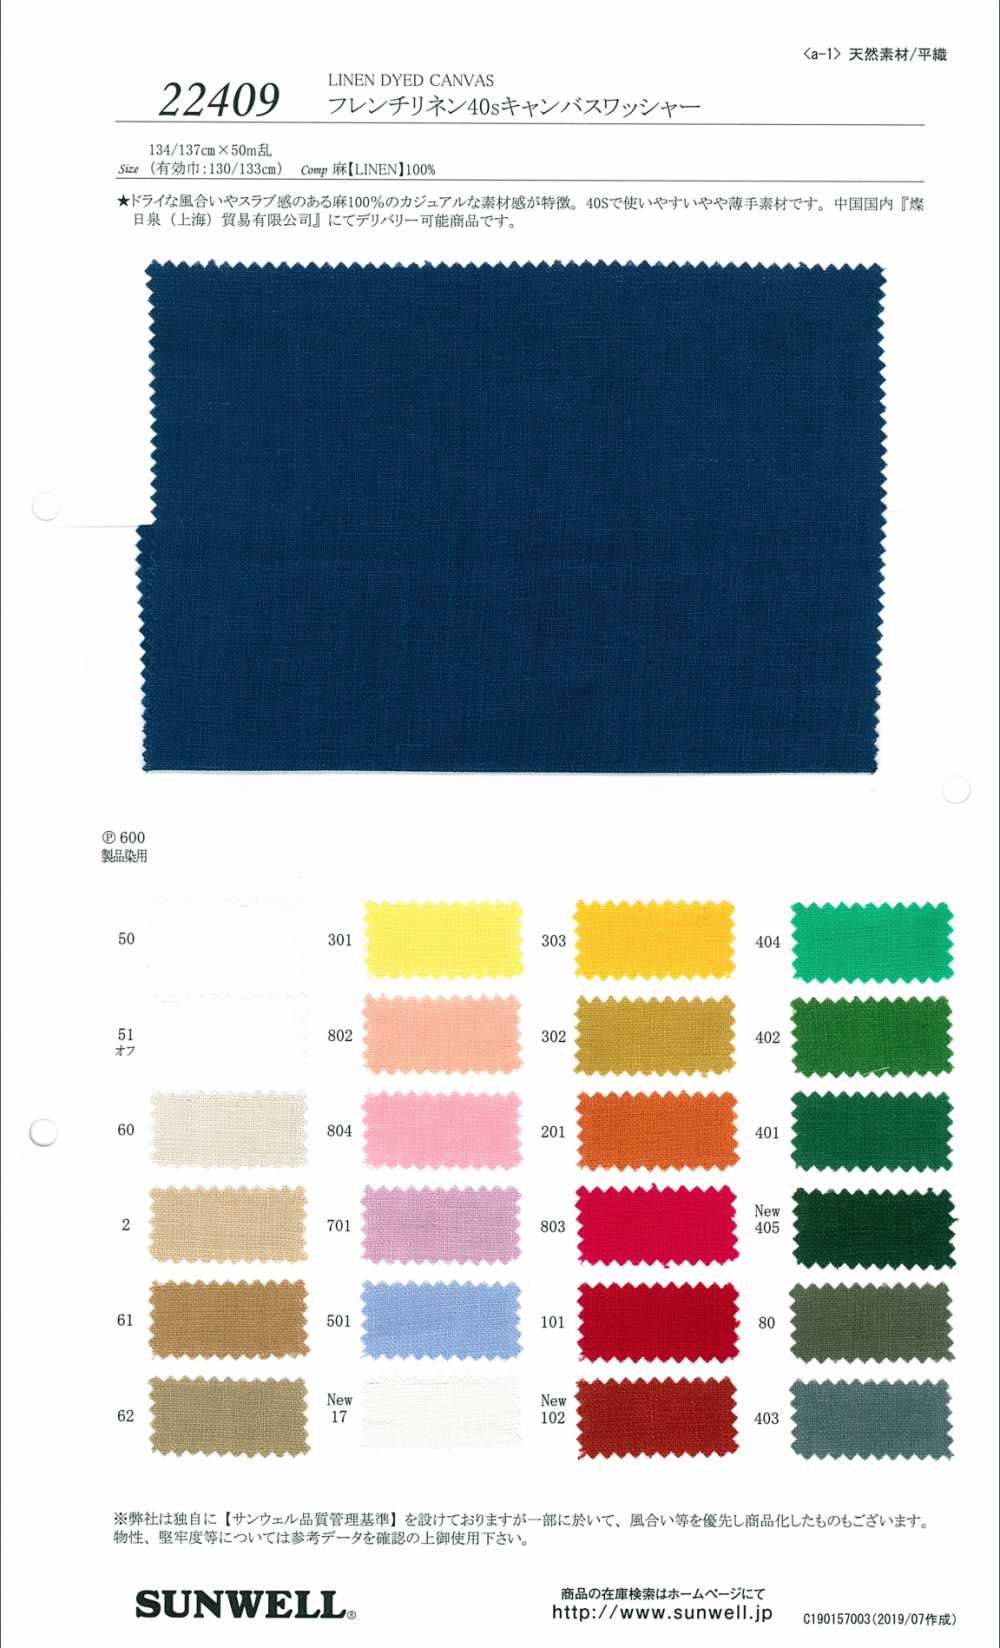 22409 French Linen 40 Single Thread Canvas Washer Verarbeitung[Textilgewebe] SUNWELL